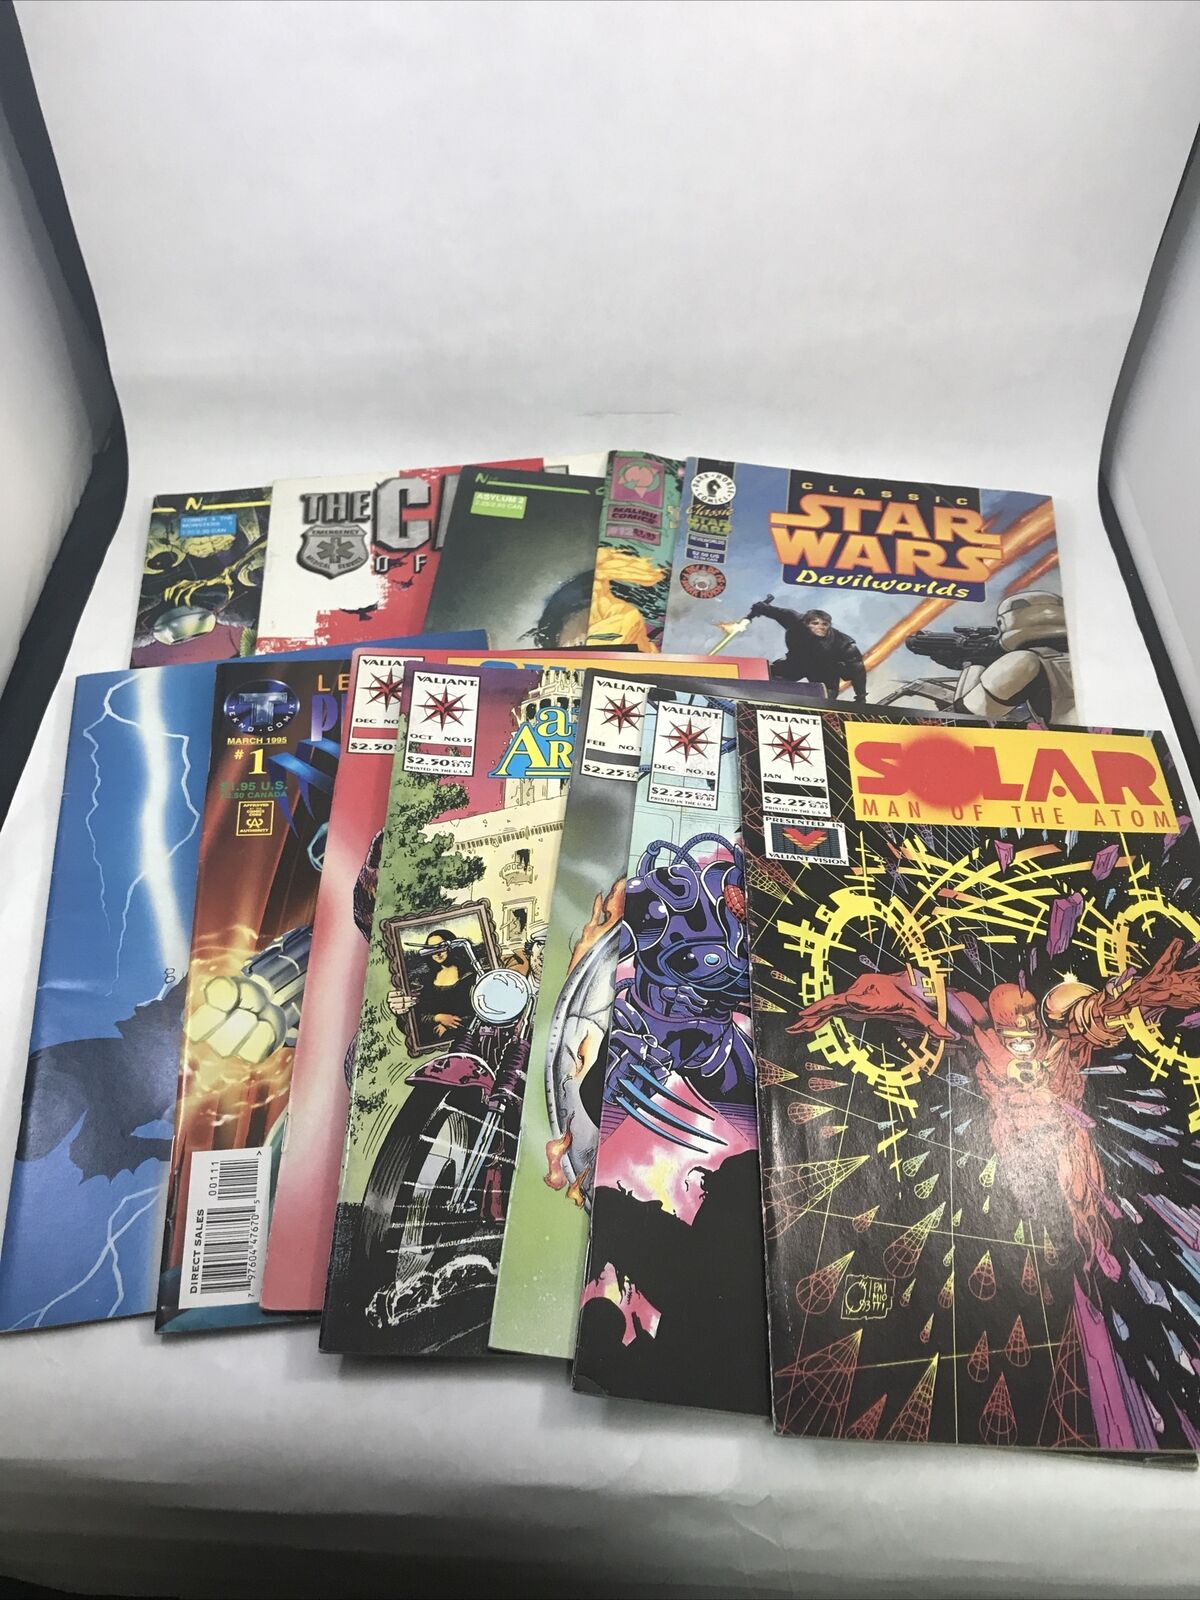 Mixed Modern Age Valiant & Indy Comic Book Grab Bag 12 Issue Rai Solar Star Wars